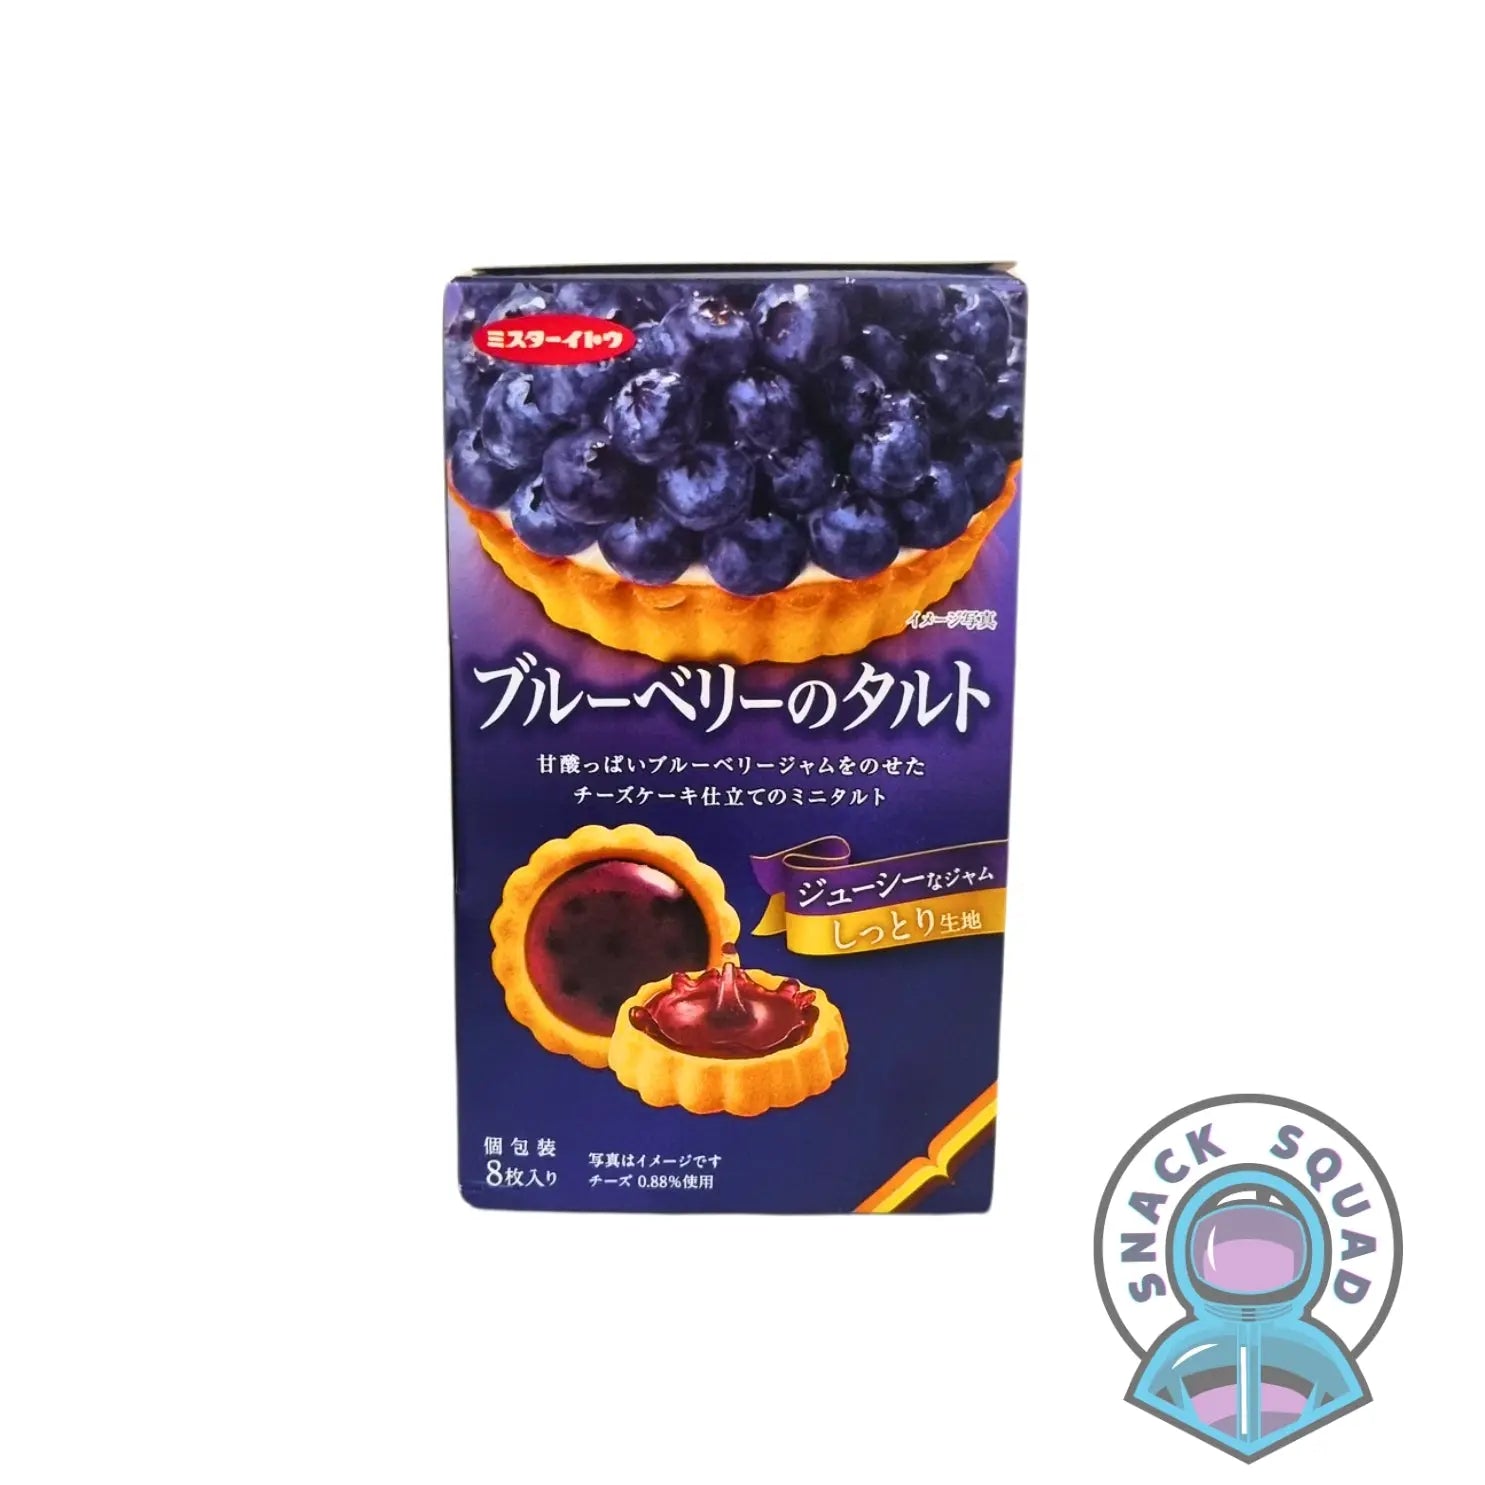 Ito Seika Blueberry Tart Cookie 110g (Japan) Snack Squad